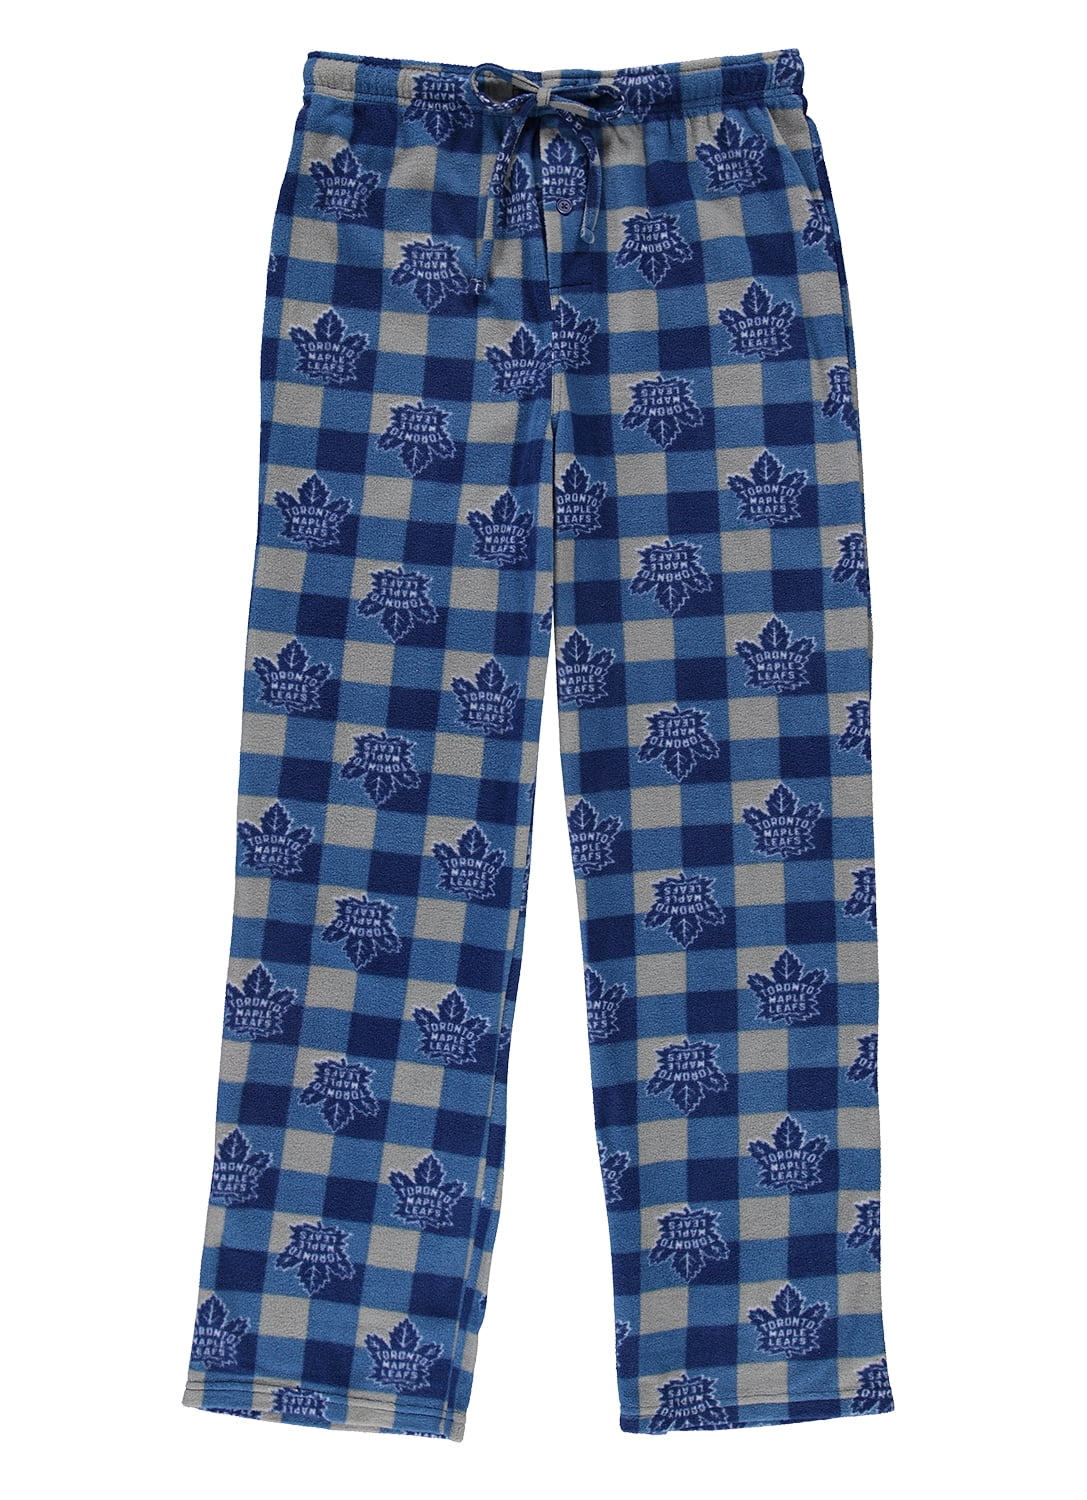 NHL Men's Sleep Pants | Toronto Maple Leafs Fleece Pajama Bottoms Size ...